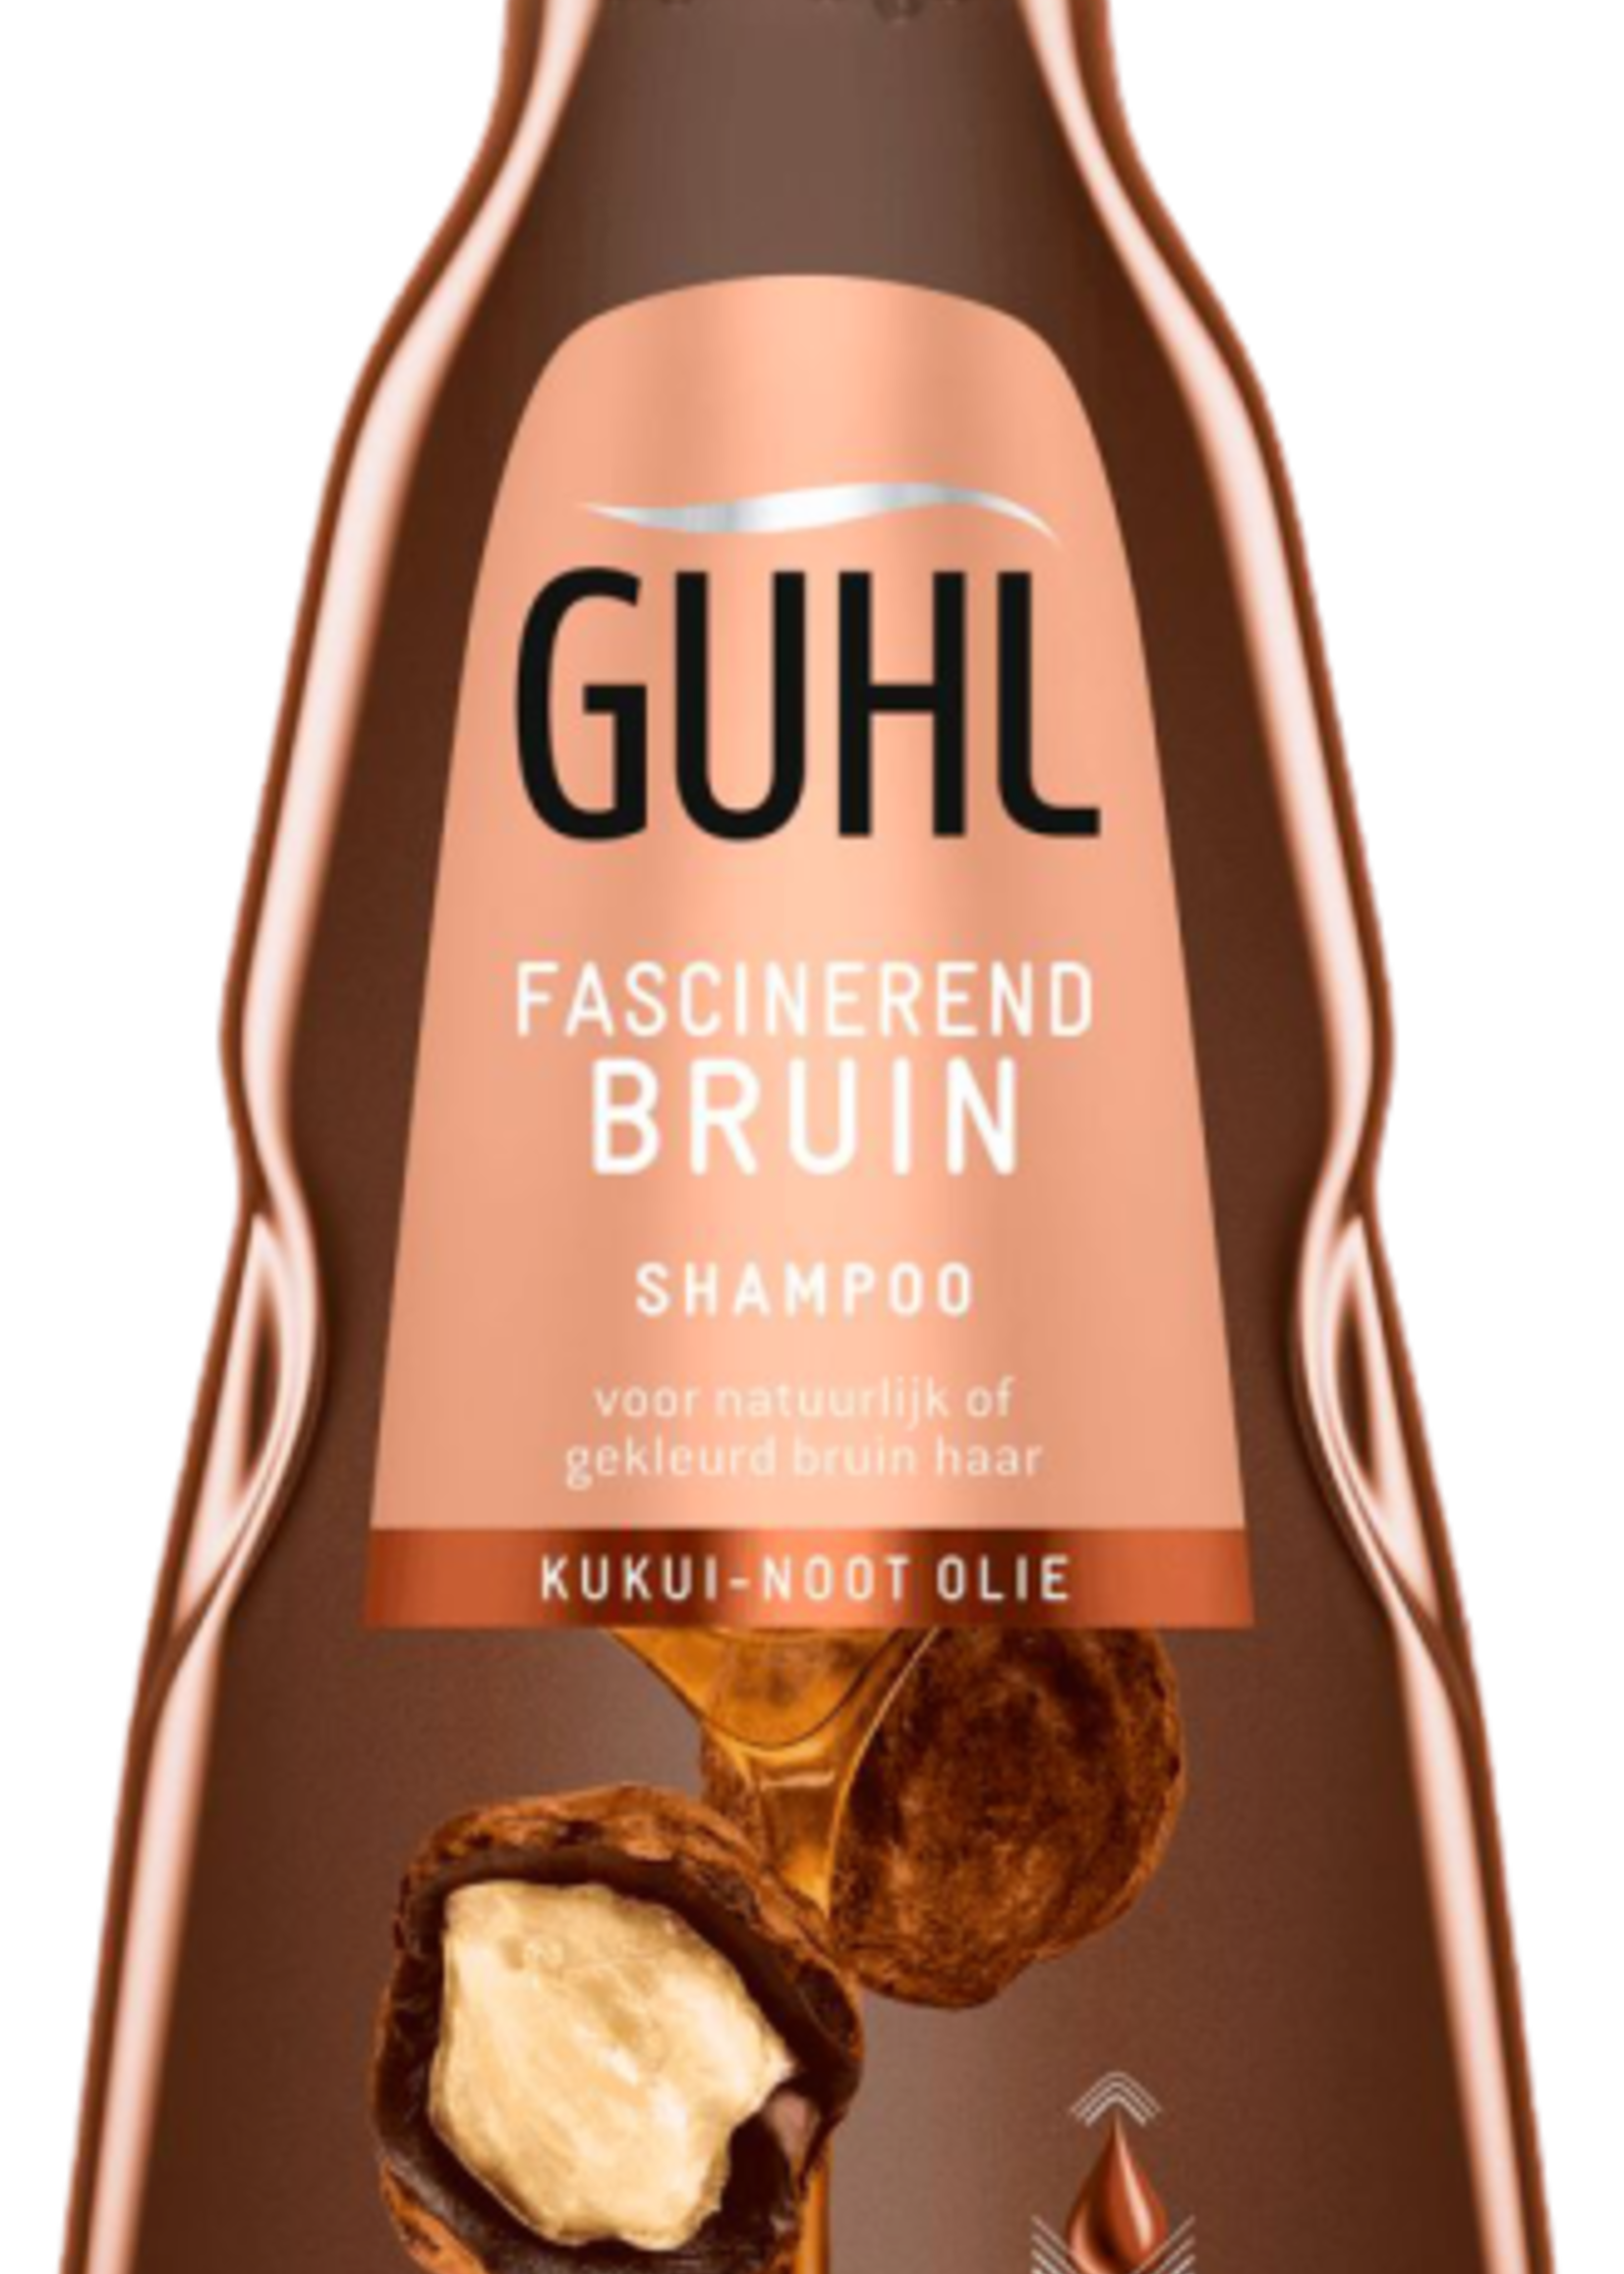 Guhl Fascinerend Bruin Shampoo 250ml